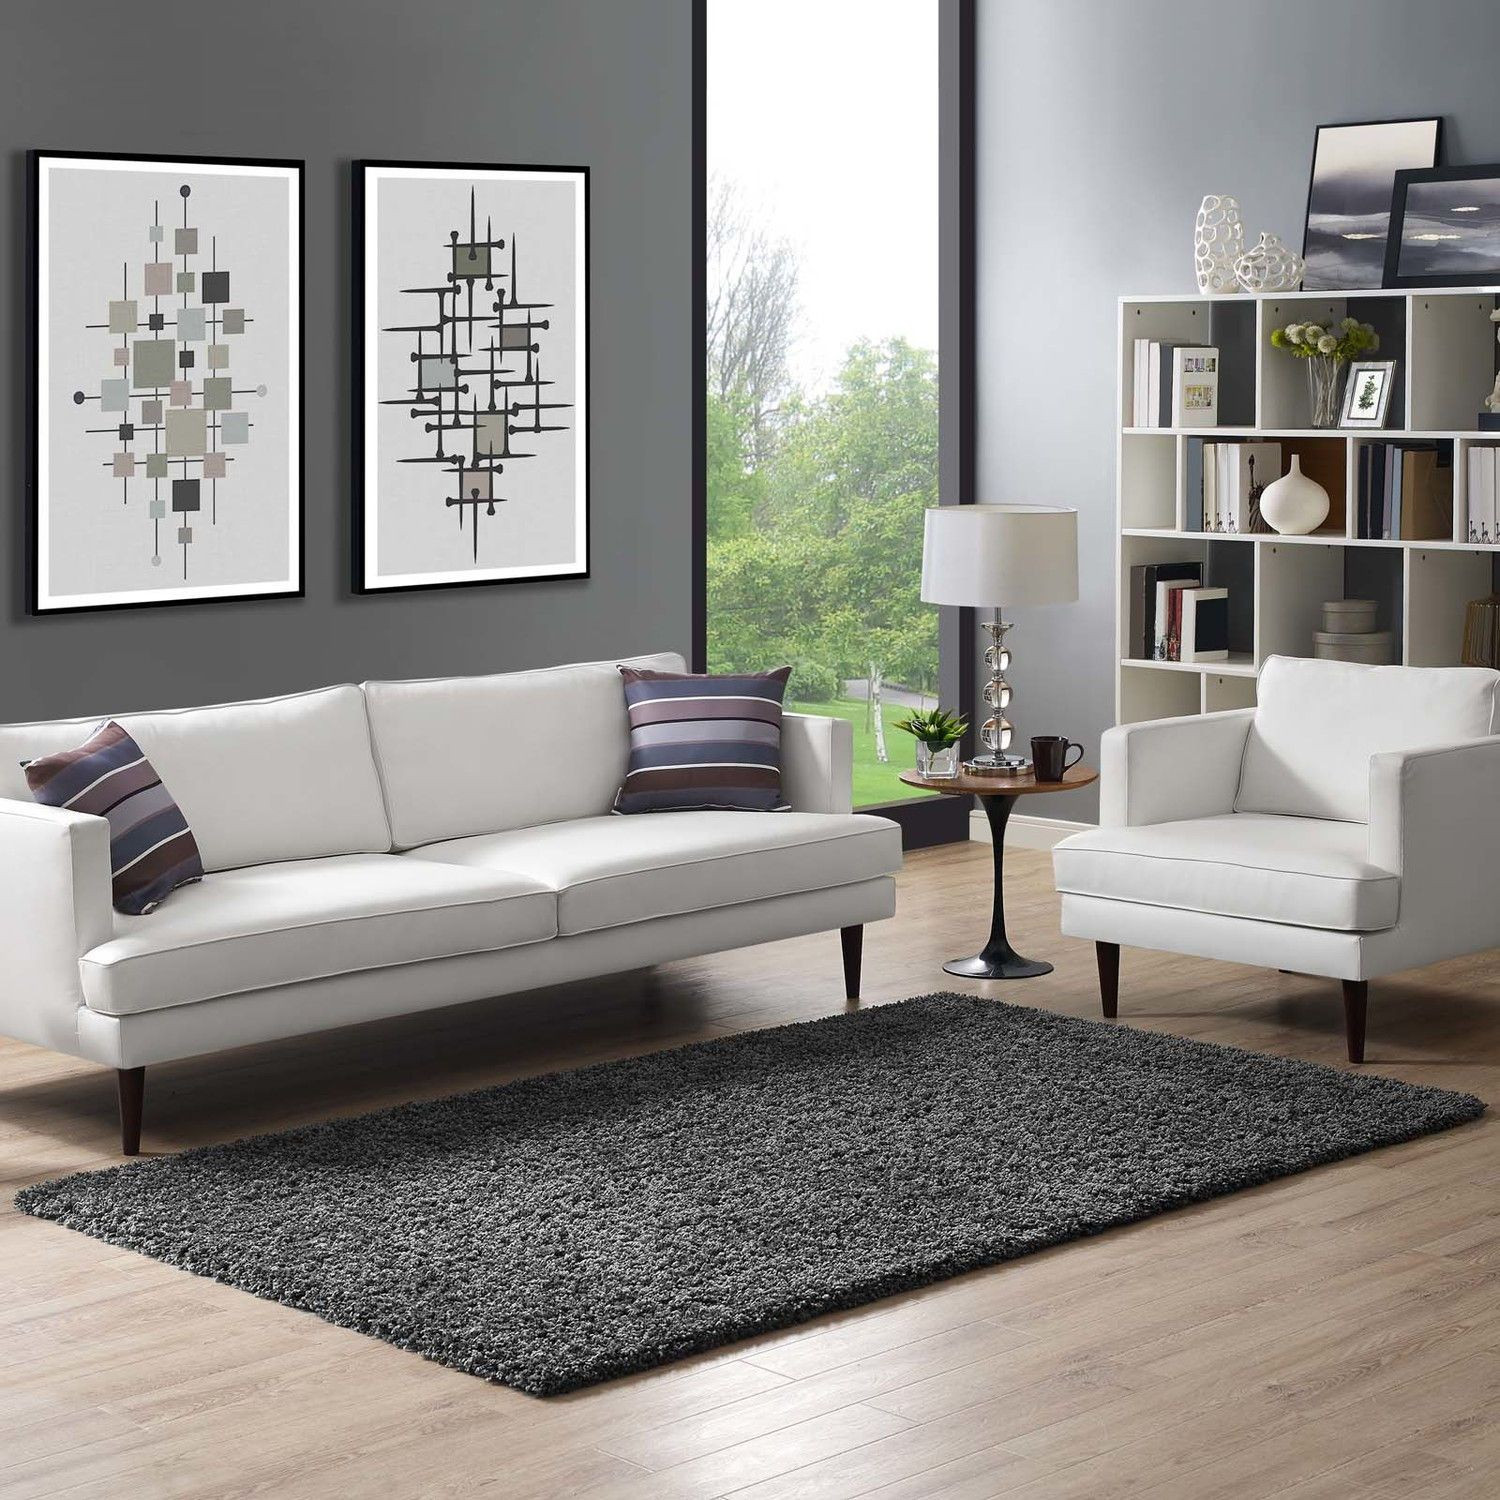 5X8 Rug In Living Room
 Enyssa Dark Gray 5x8 Area Rug in 2020